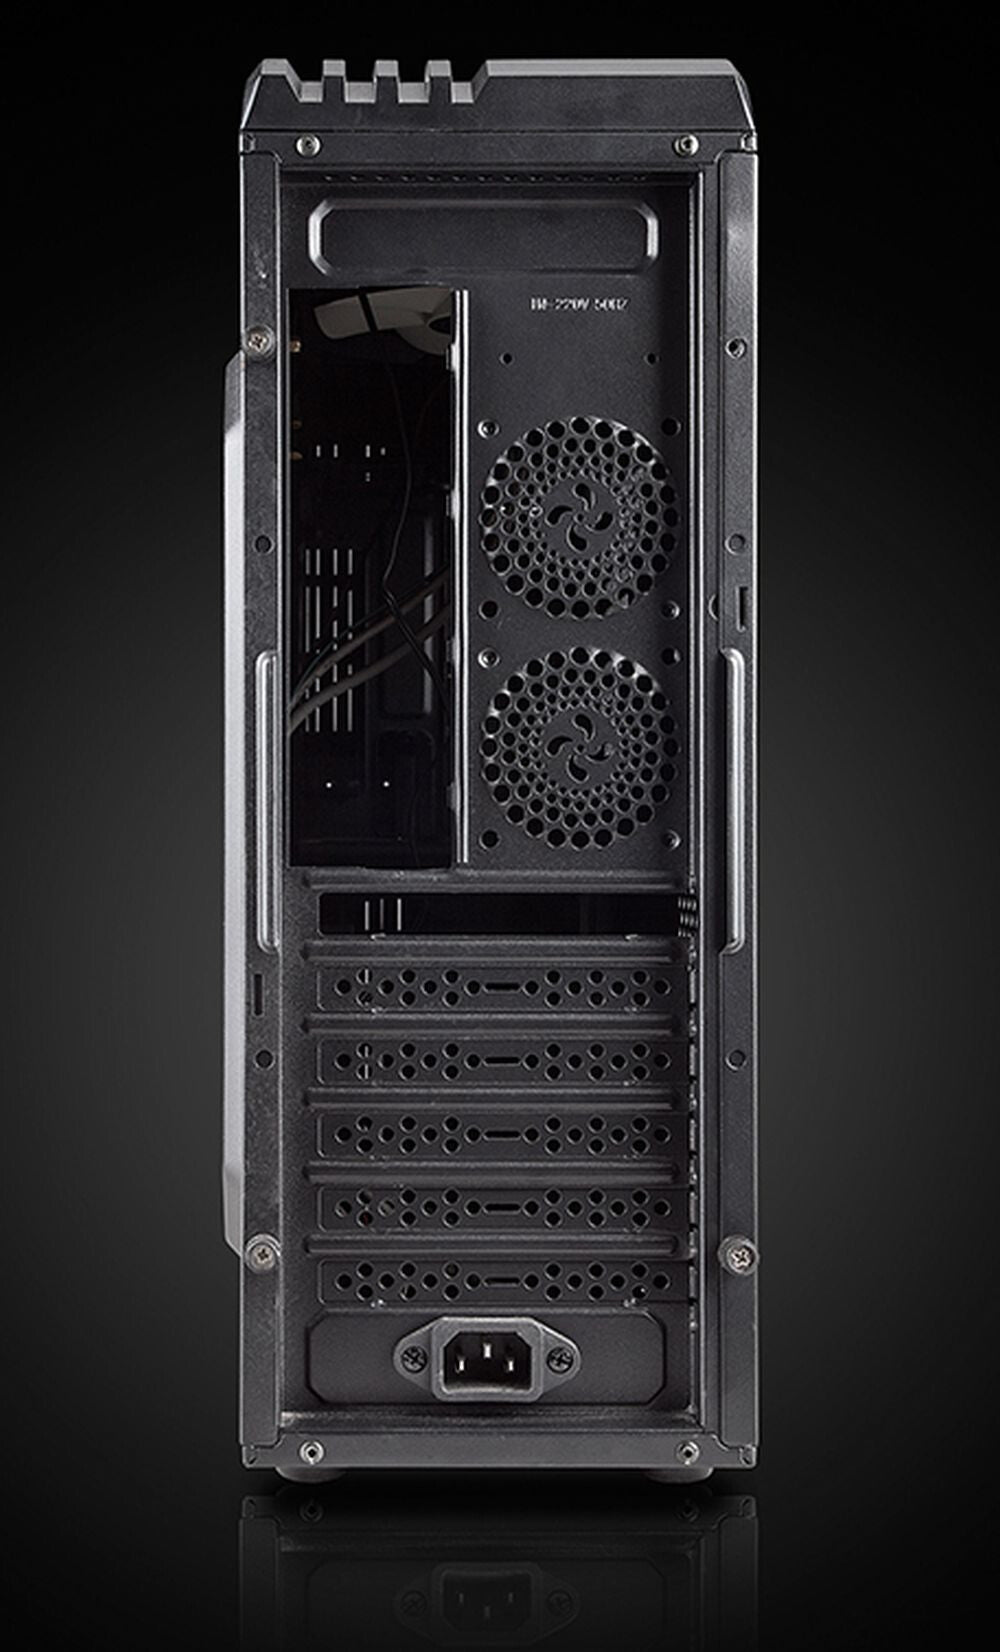 Chieftec UE-02B - MicroATX Mini Tower Case in Black